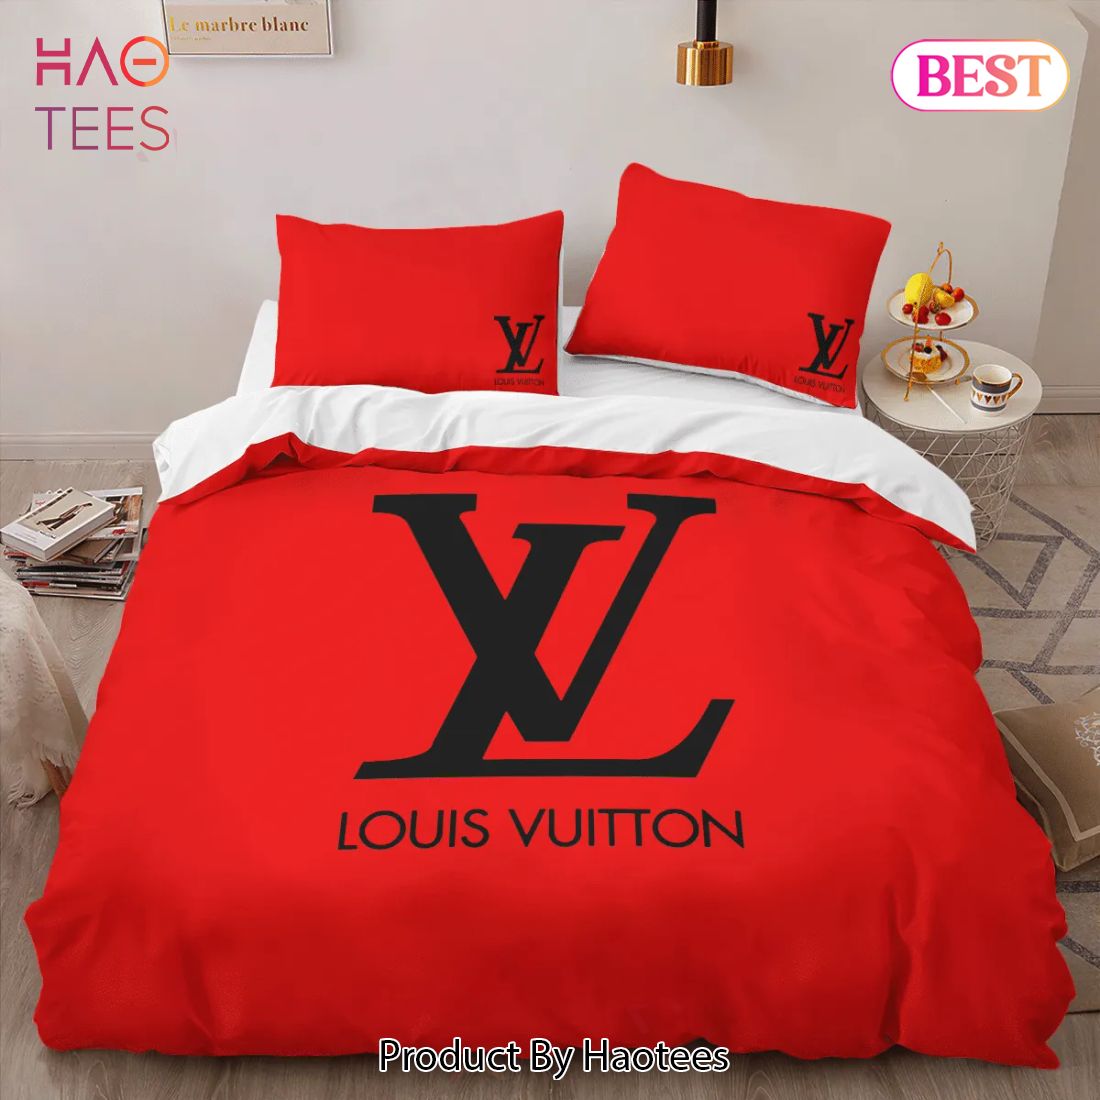 SALE] Louis Vuitton Red Luxury Brand High-End Bedding Set LV Home Decor